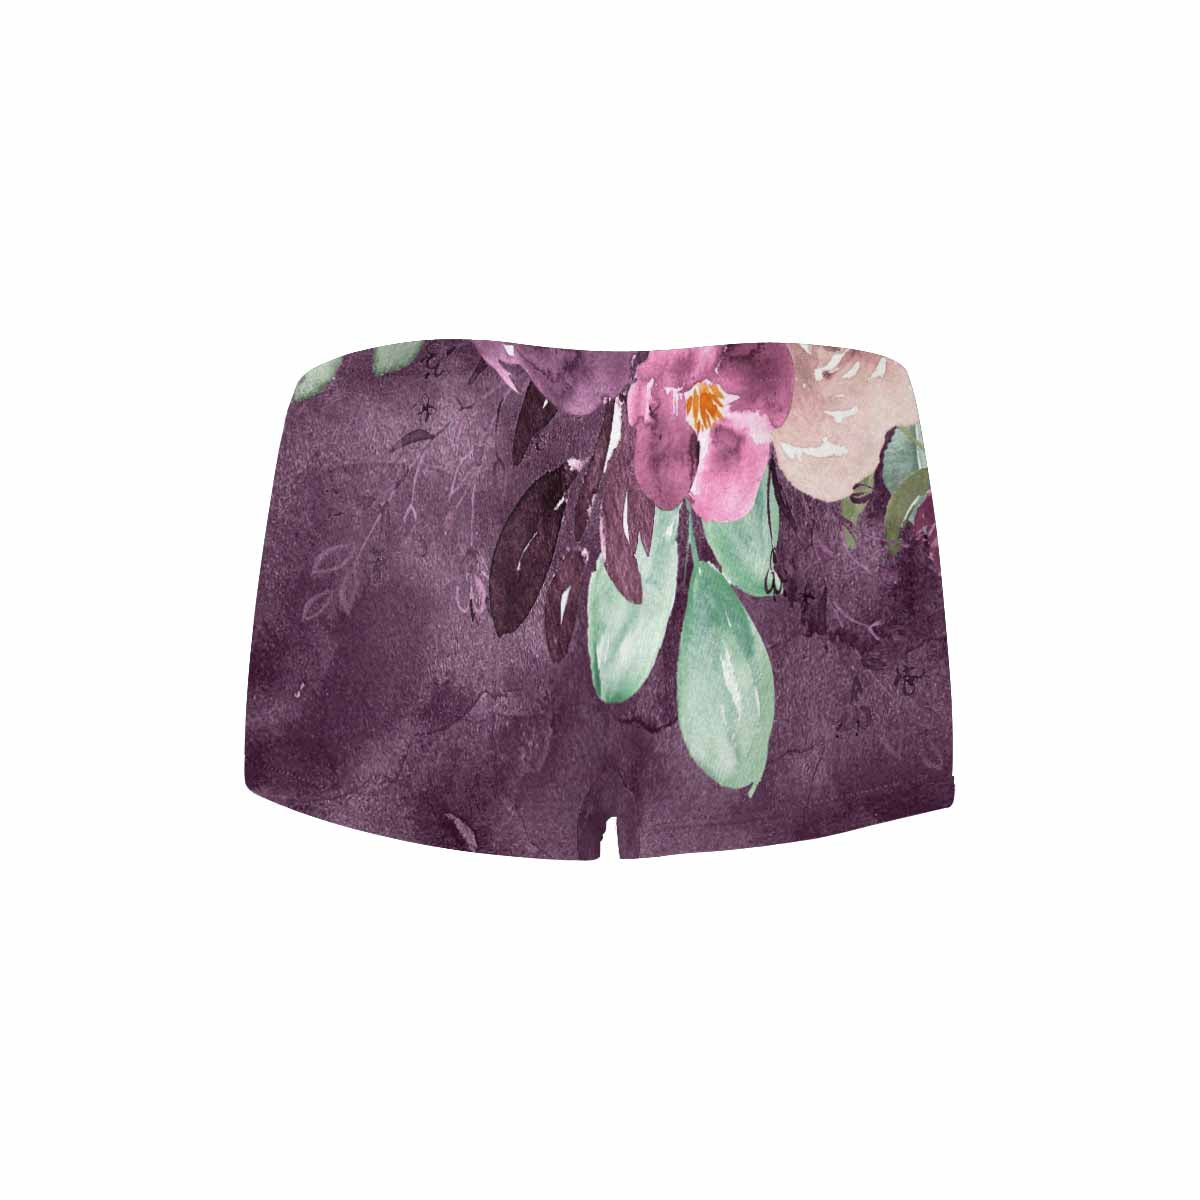 Floral 2, boyshorts, daisy dukes, pum pum shorts, panties, design 29